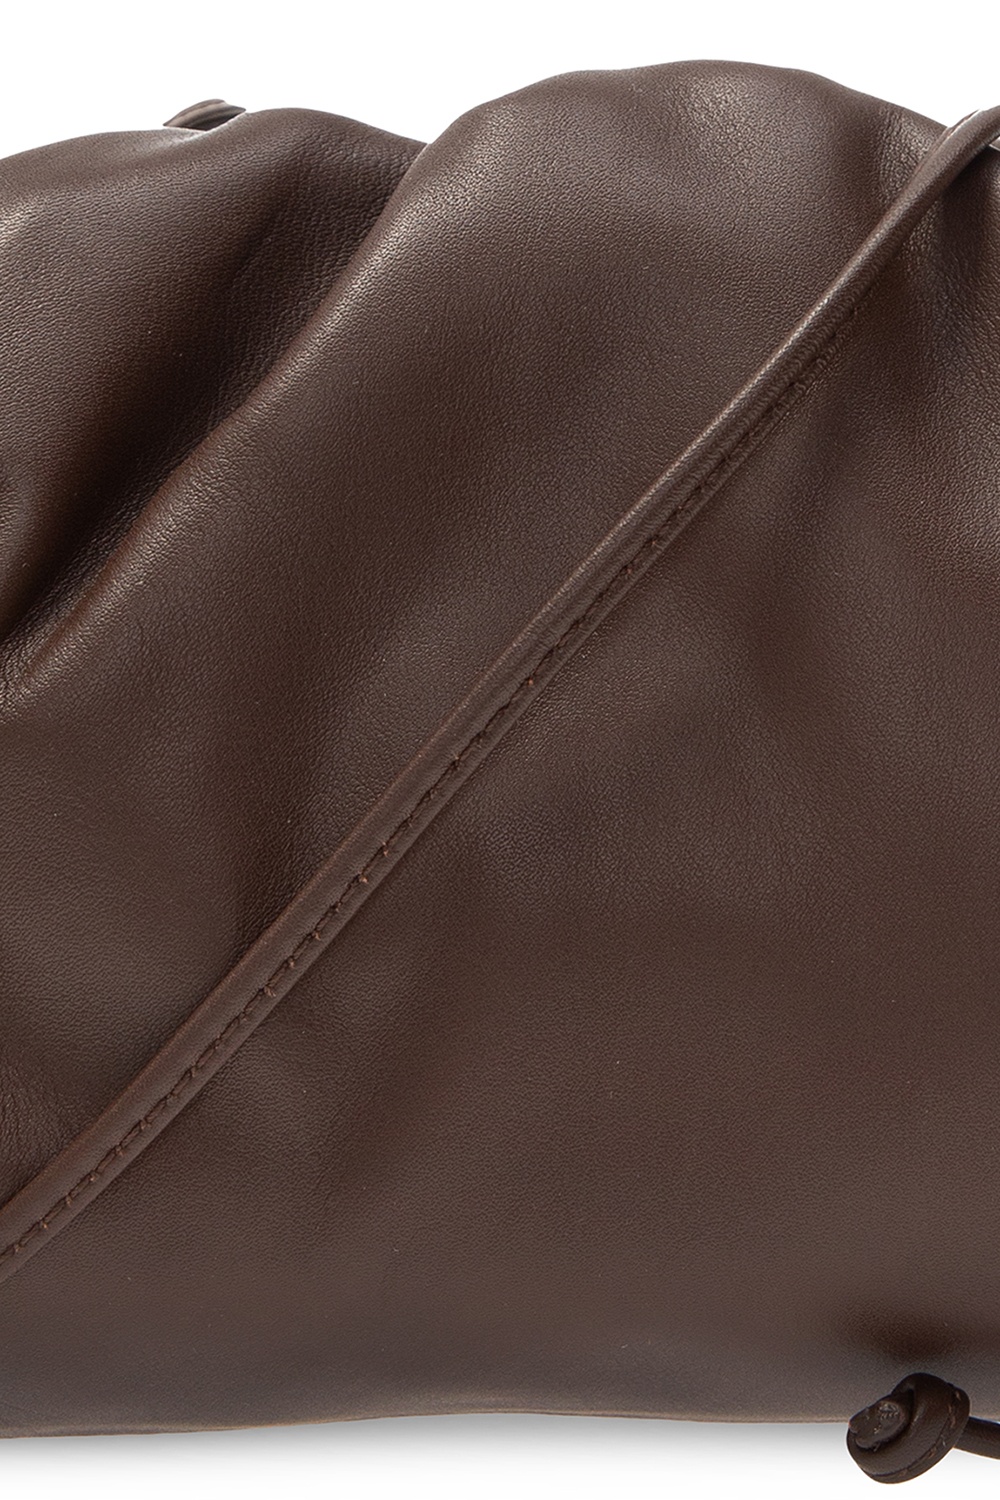 bottega Card Veneta ‘The Mini Pouch’ shoulder bag